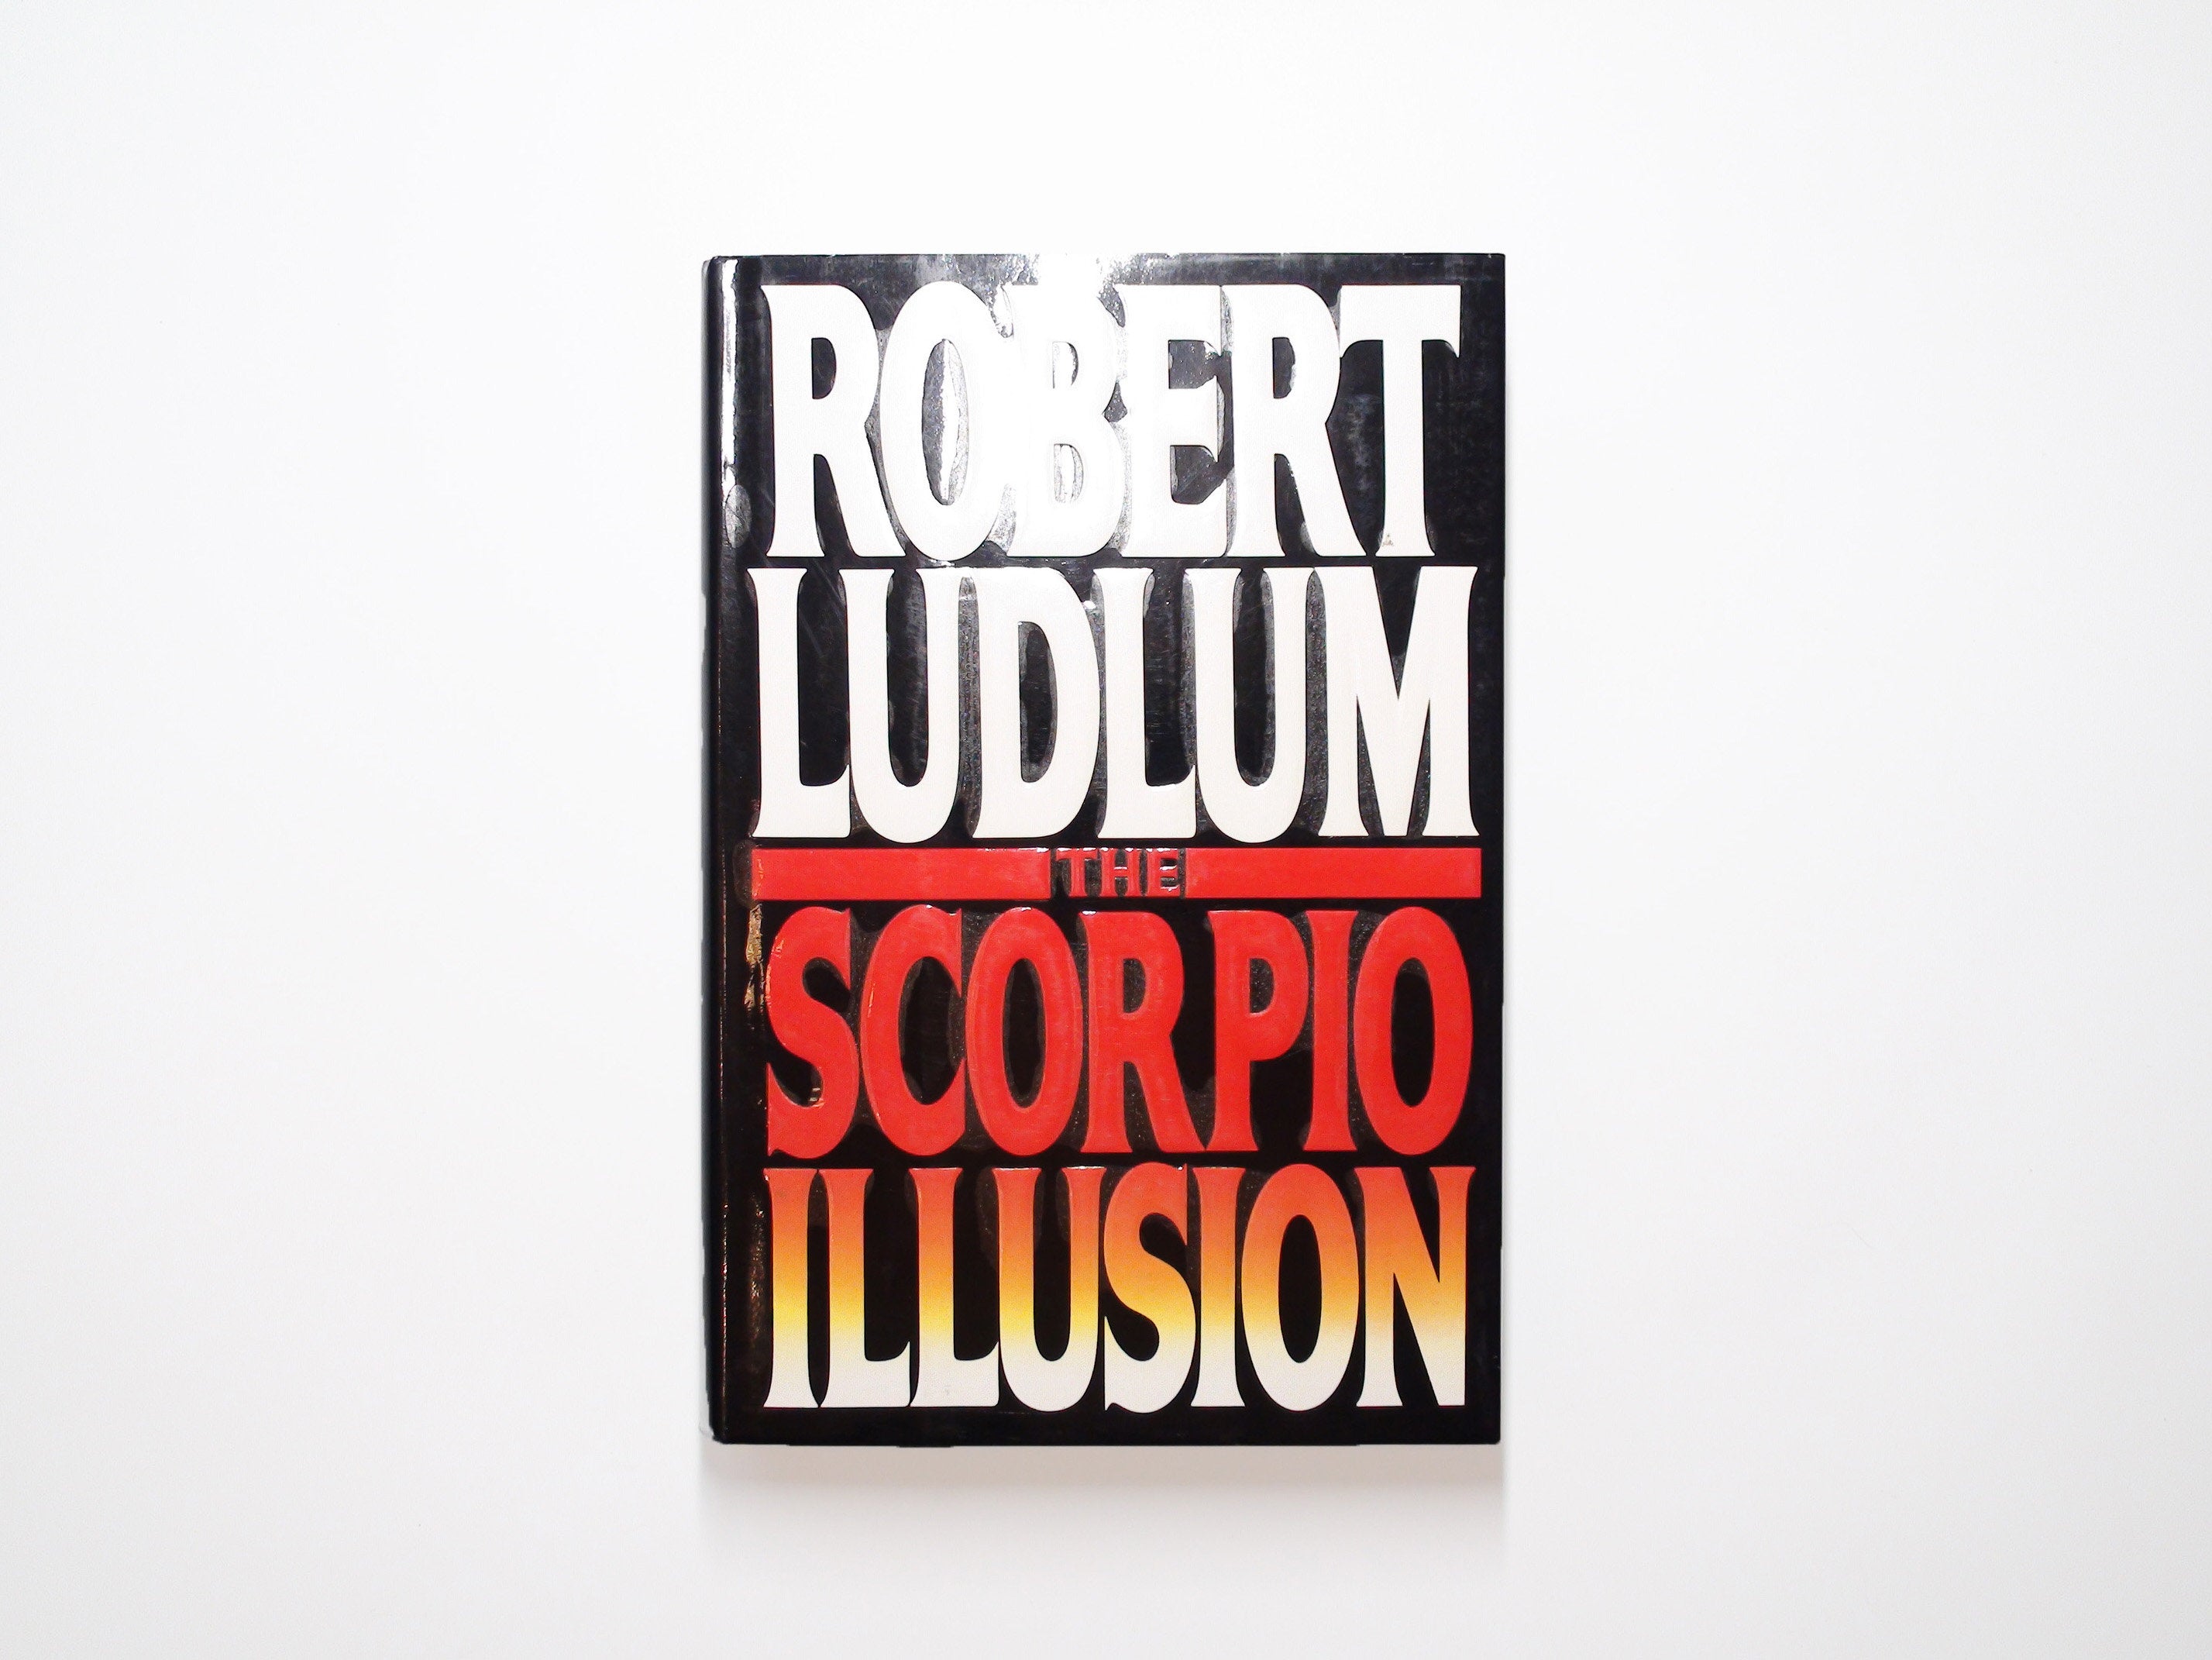 The Scorpio Illusion, by Robert Ludlum, 1st Ed, Hardcover, 1993